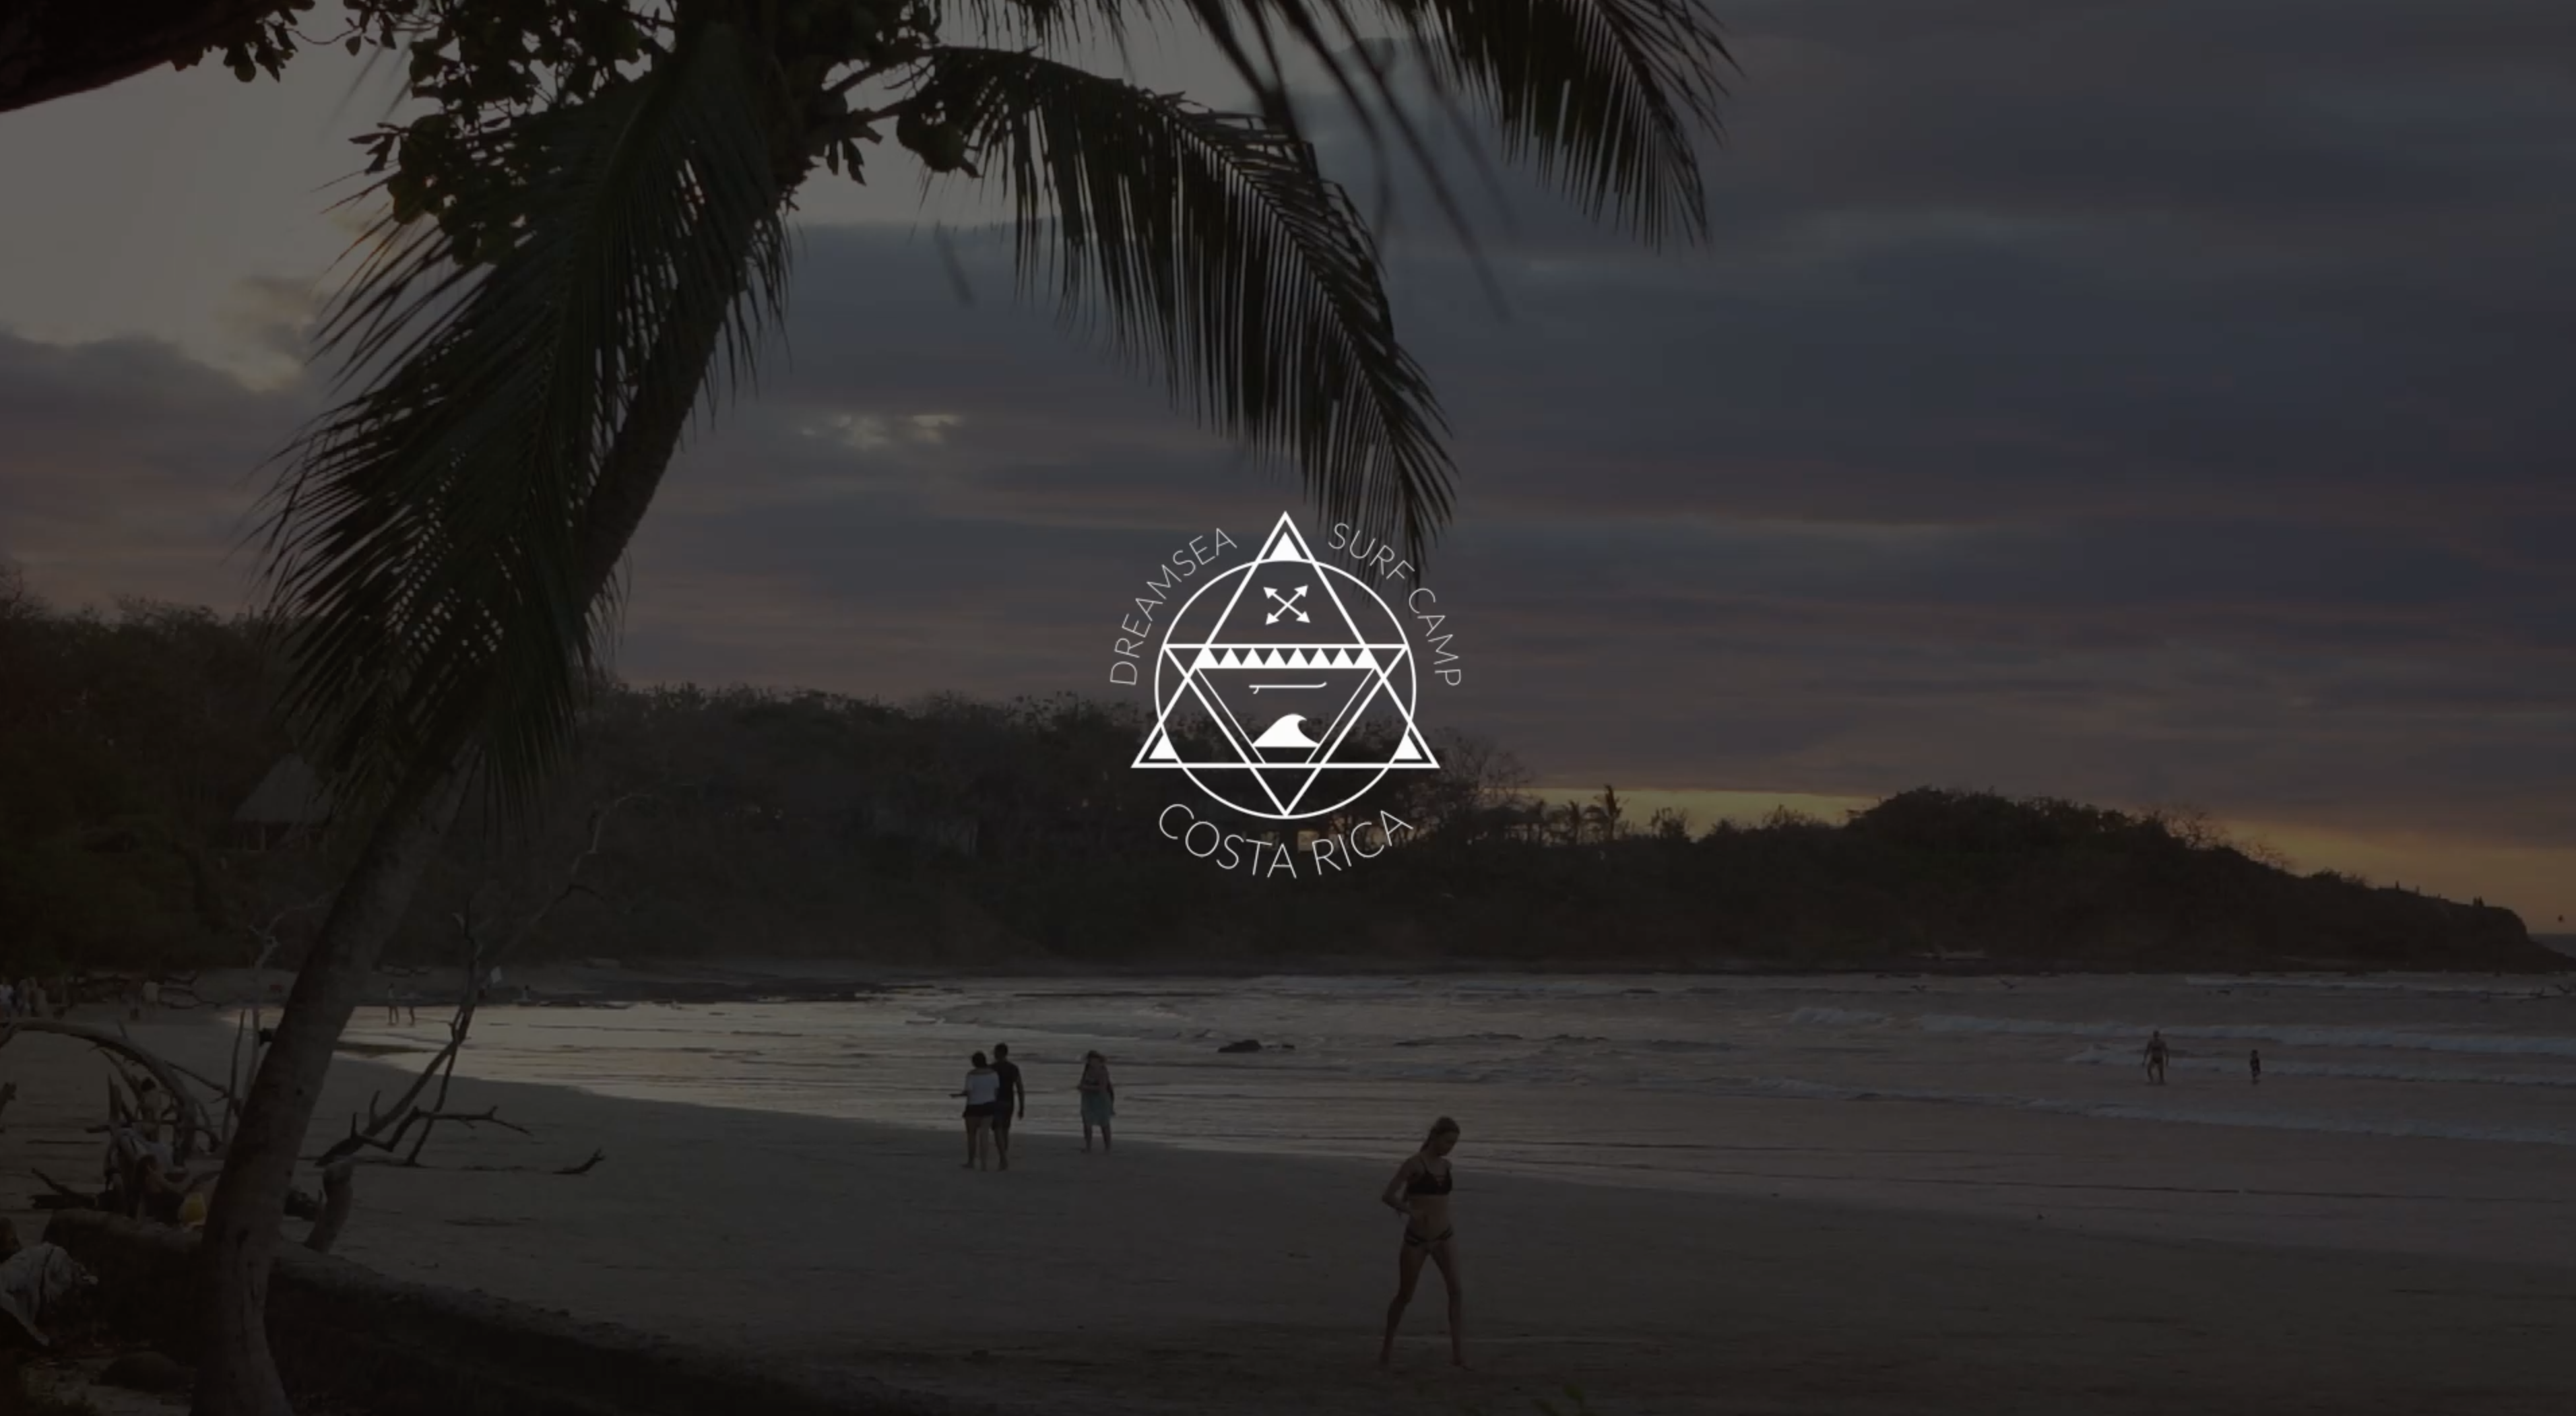 Dreamsea Surf Camp Costa Rica | Contact Us | Surfing, Glamping, Volunteering, Yoga, Adventure, Workaway, Cuisine